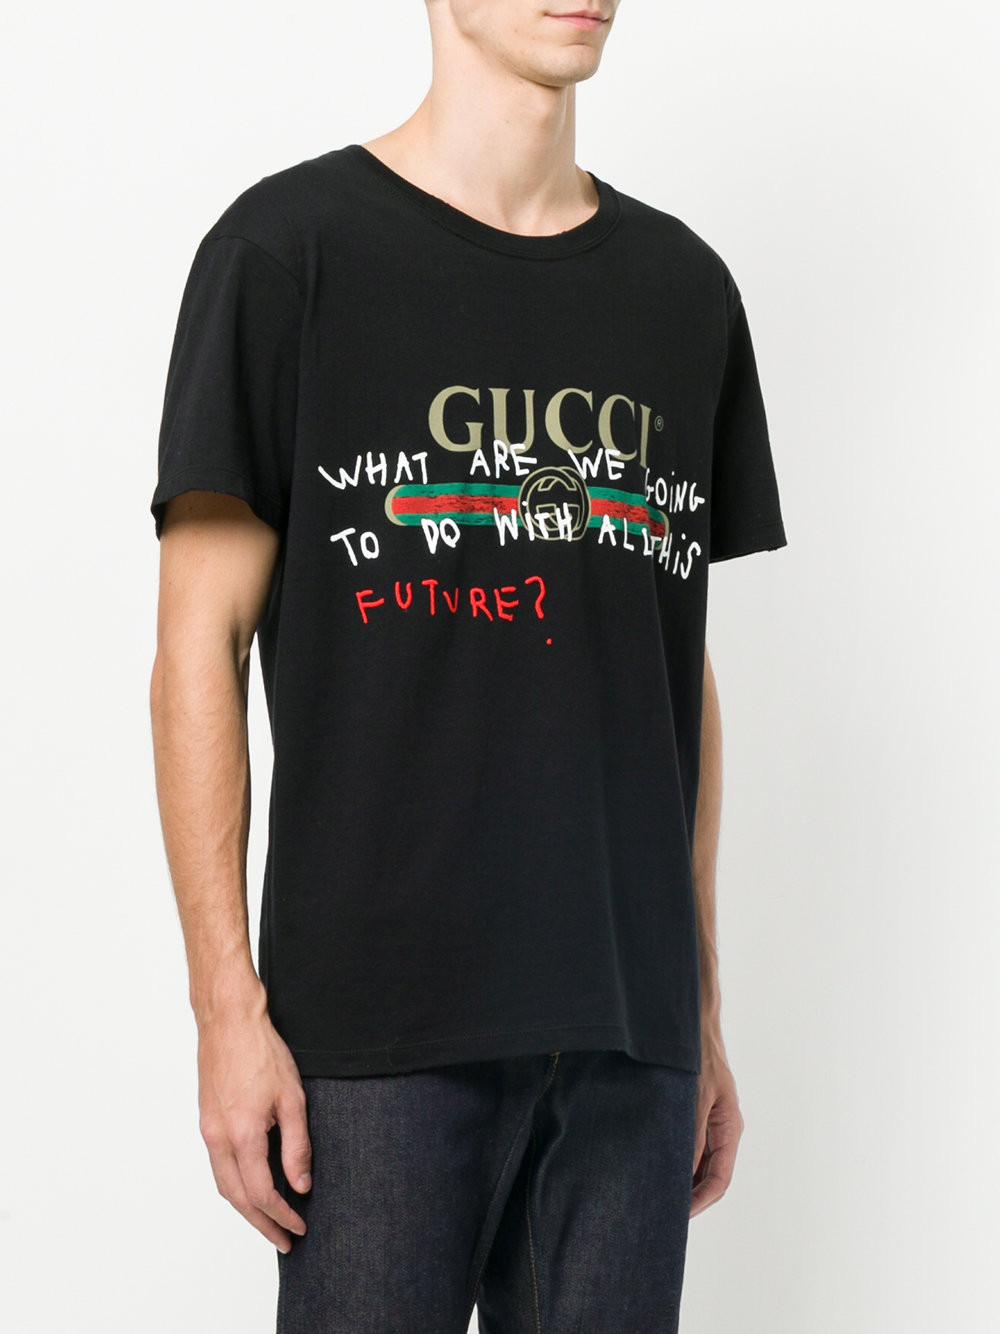 Gucci Cotton X Coco Capitan T-shirt in Black for Men - Lyst